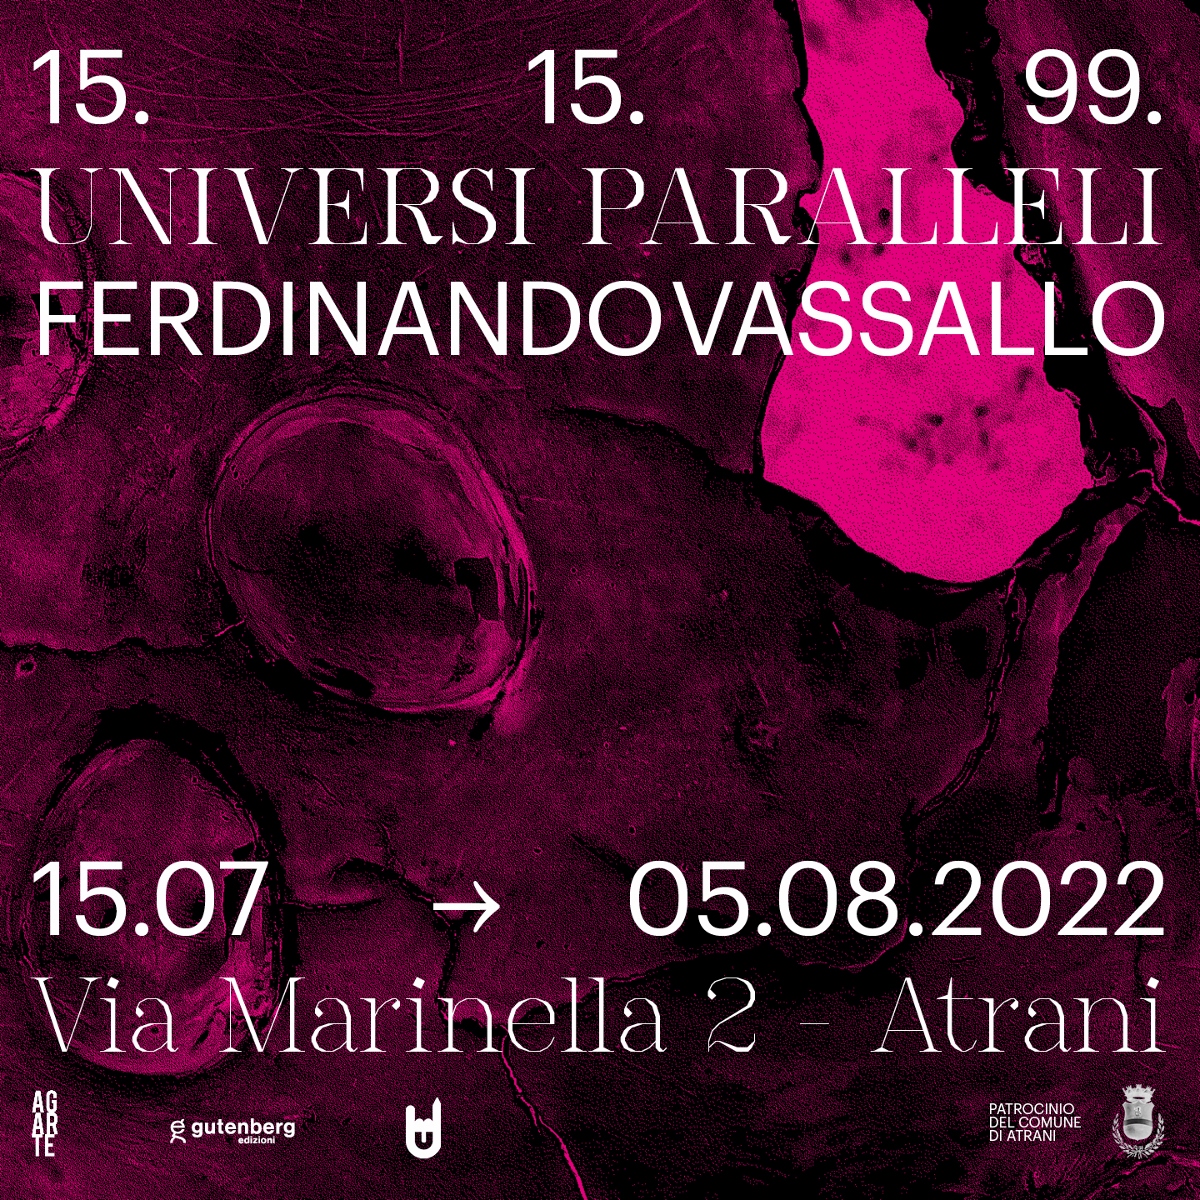 Ferdinando Vassallo - 15. 15. 99. Universi paralleli